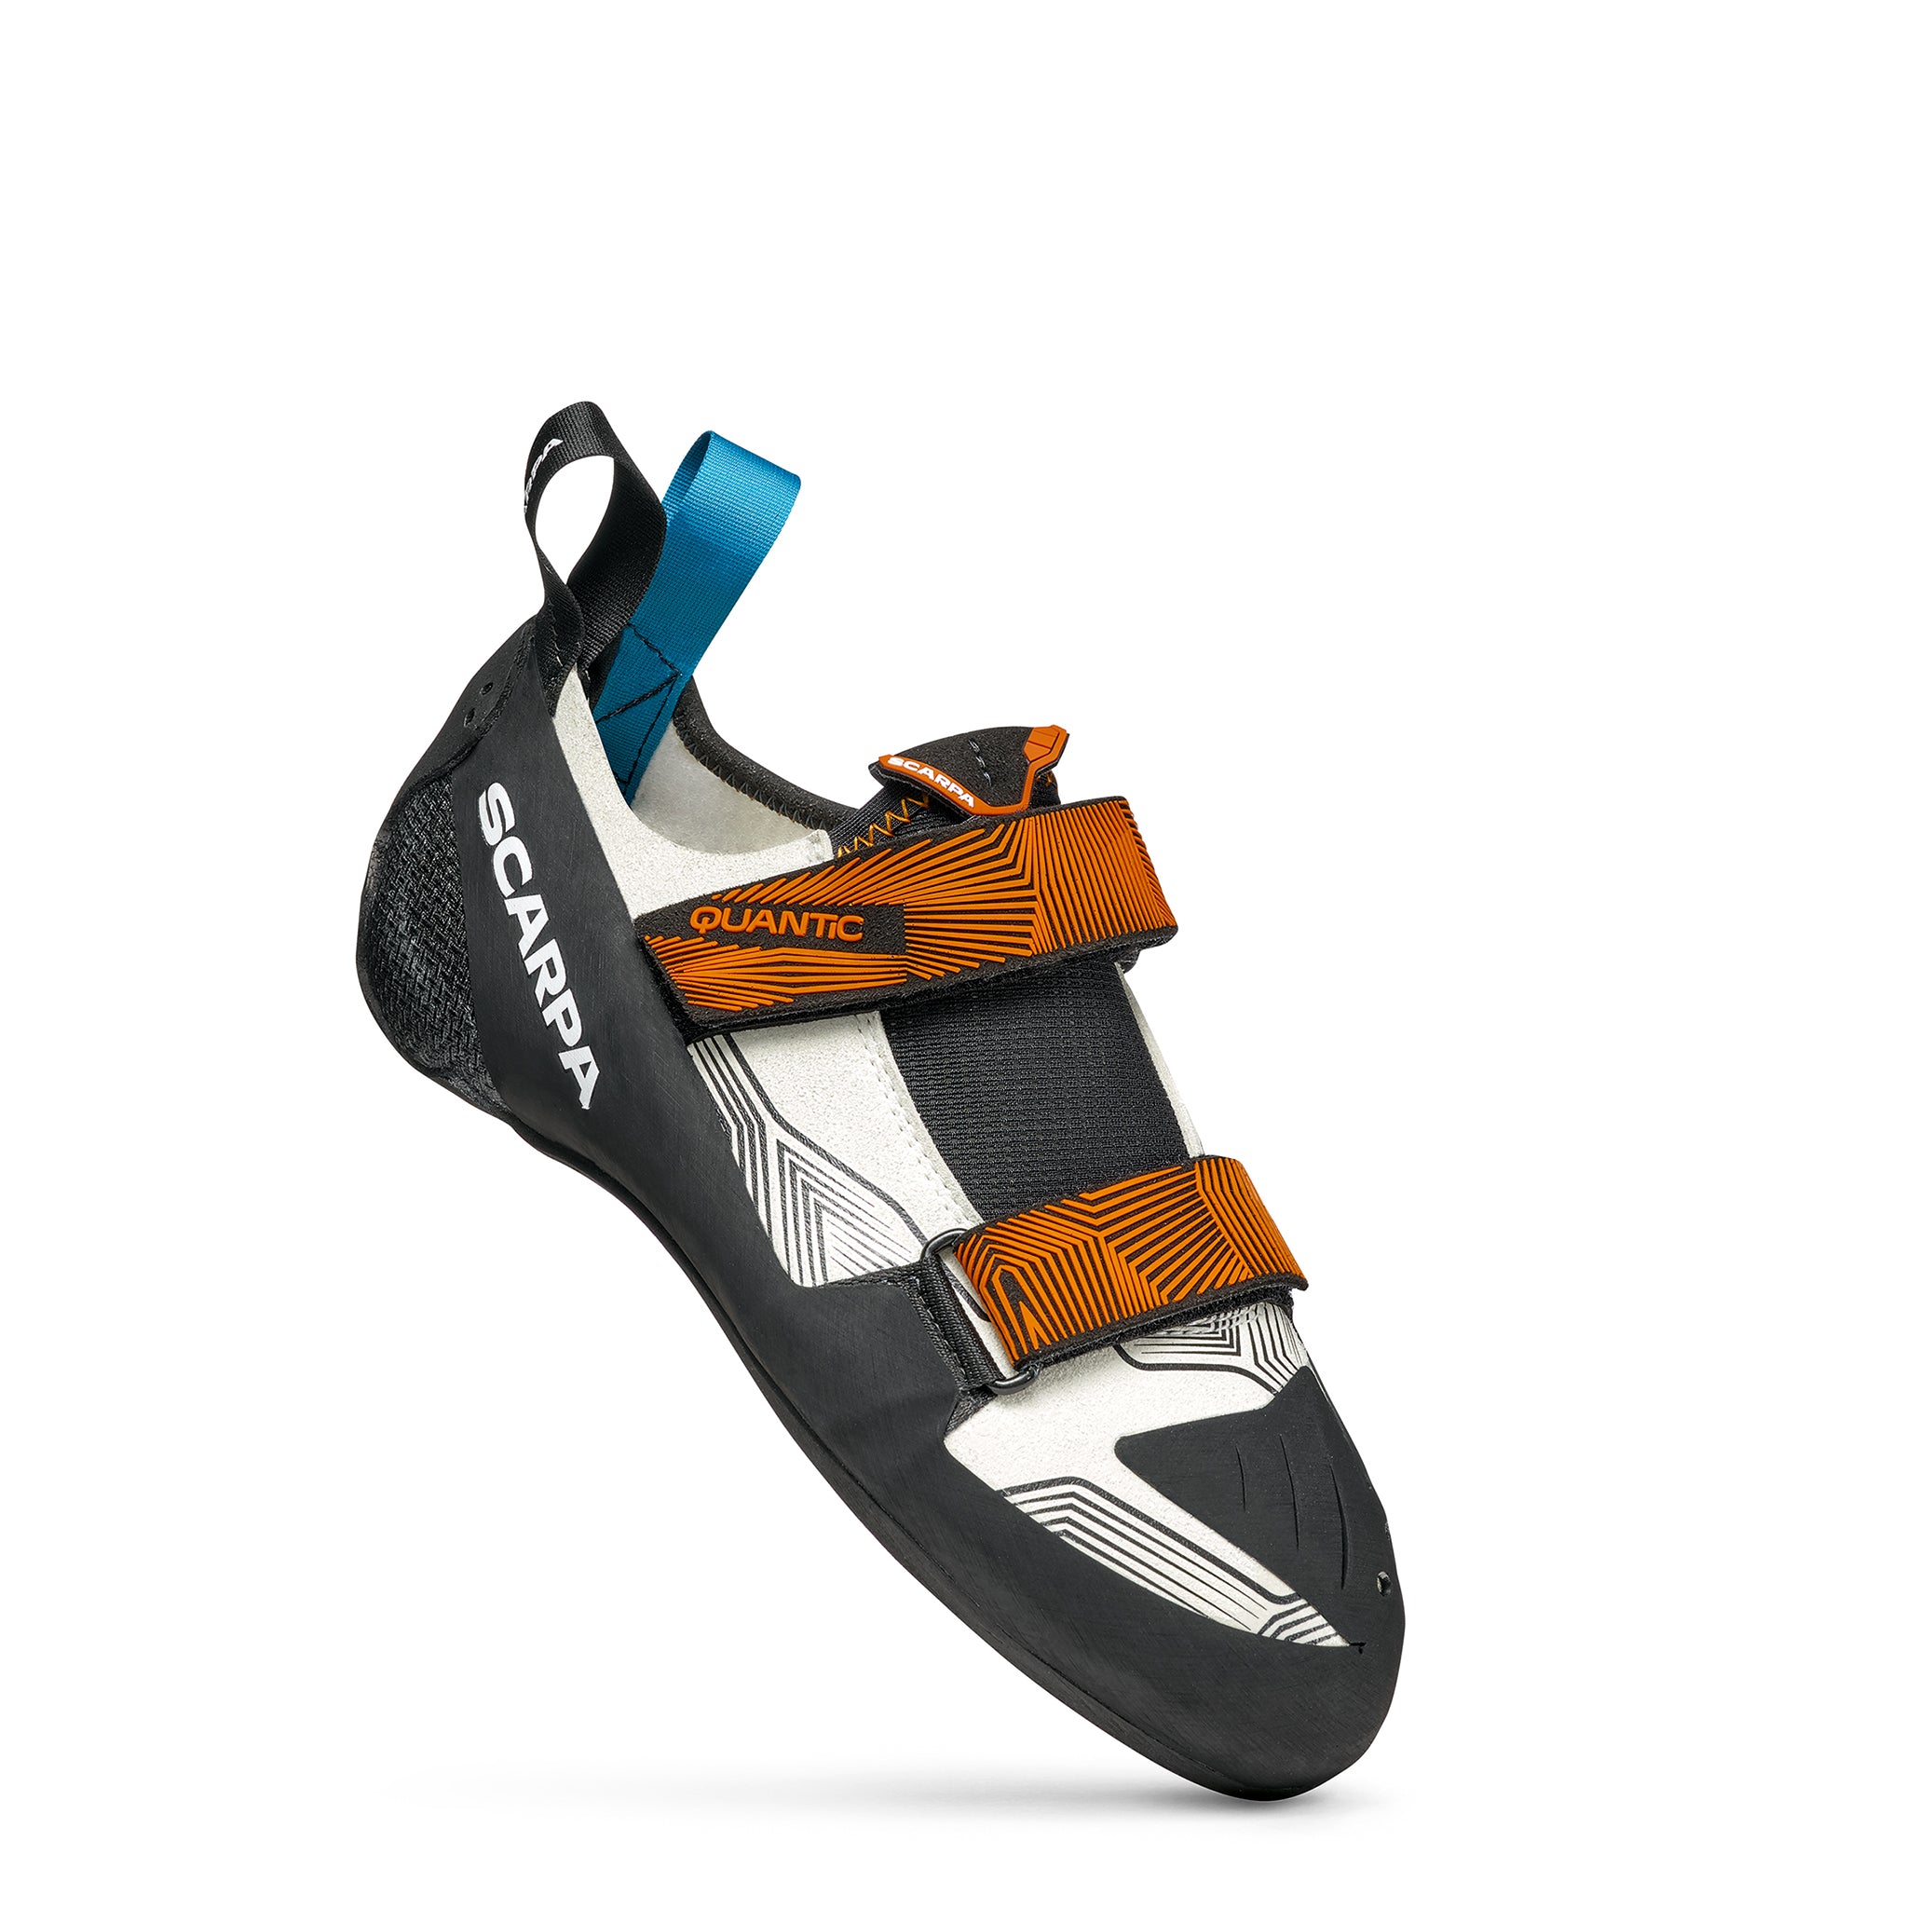 Scarpa QUANTIC all-round performance climbing shoe